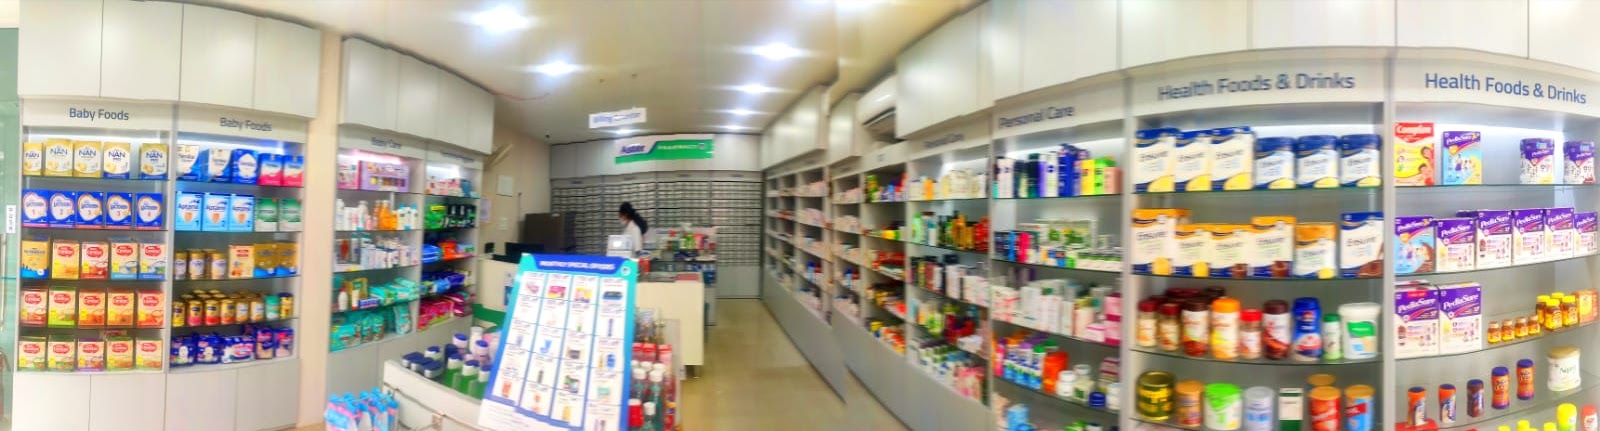 Aster Pharmacy in Edachira, Ernakulam